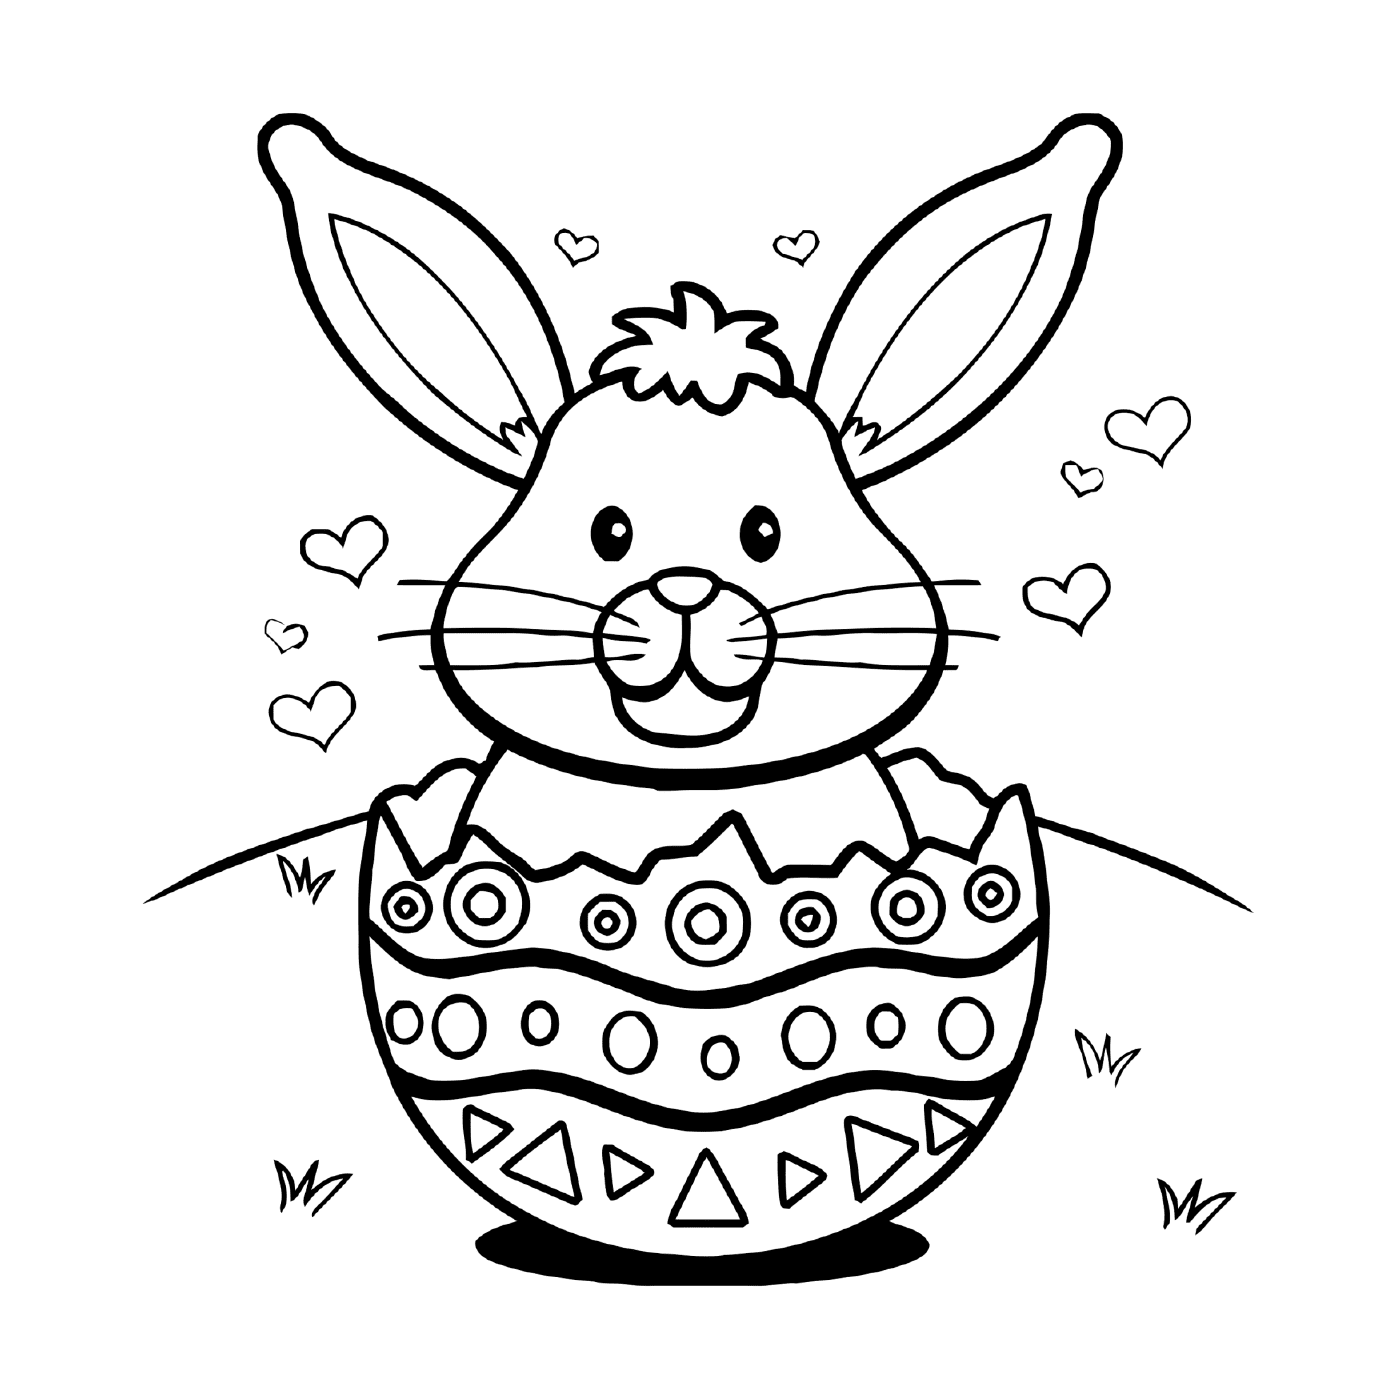  Easter rabbit in an egg 